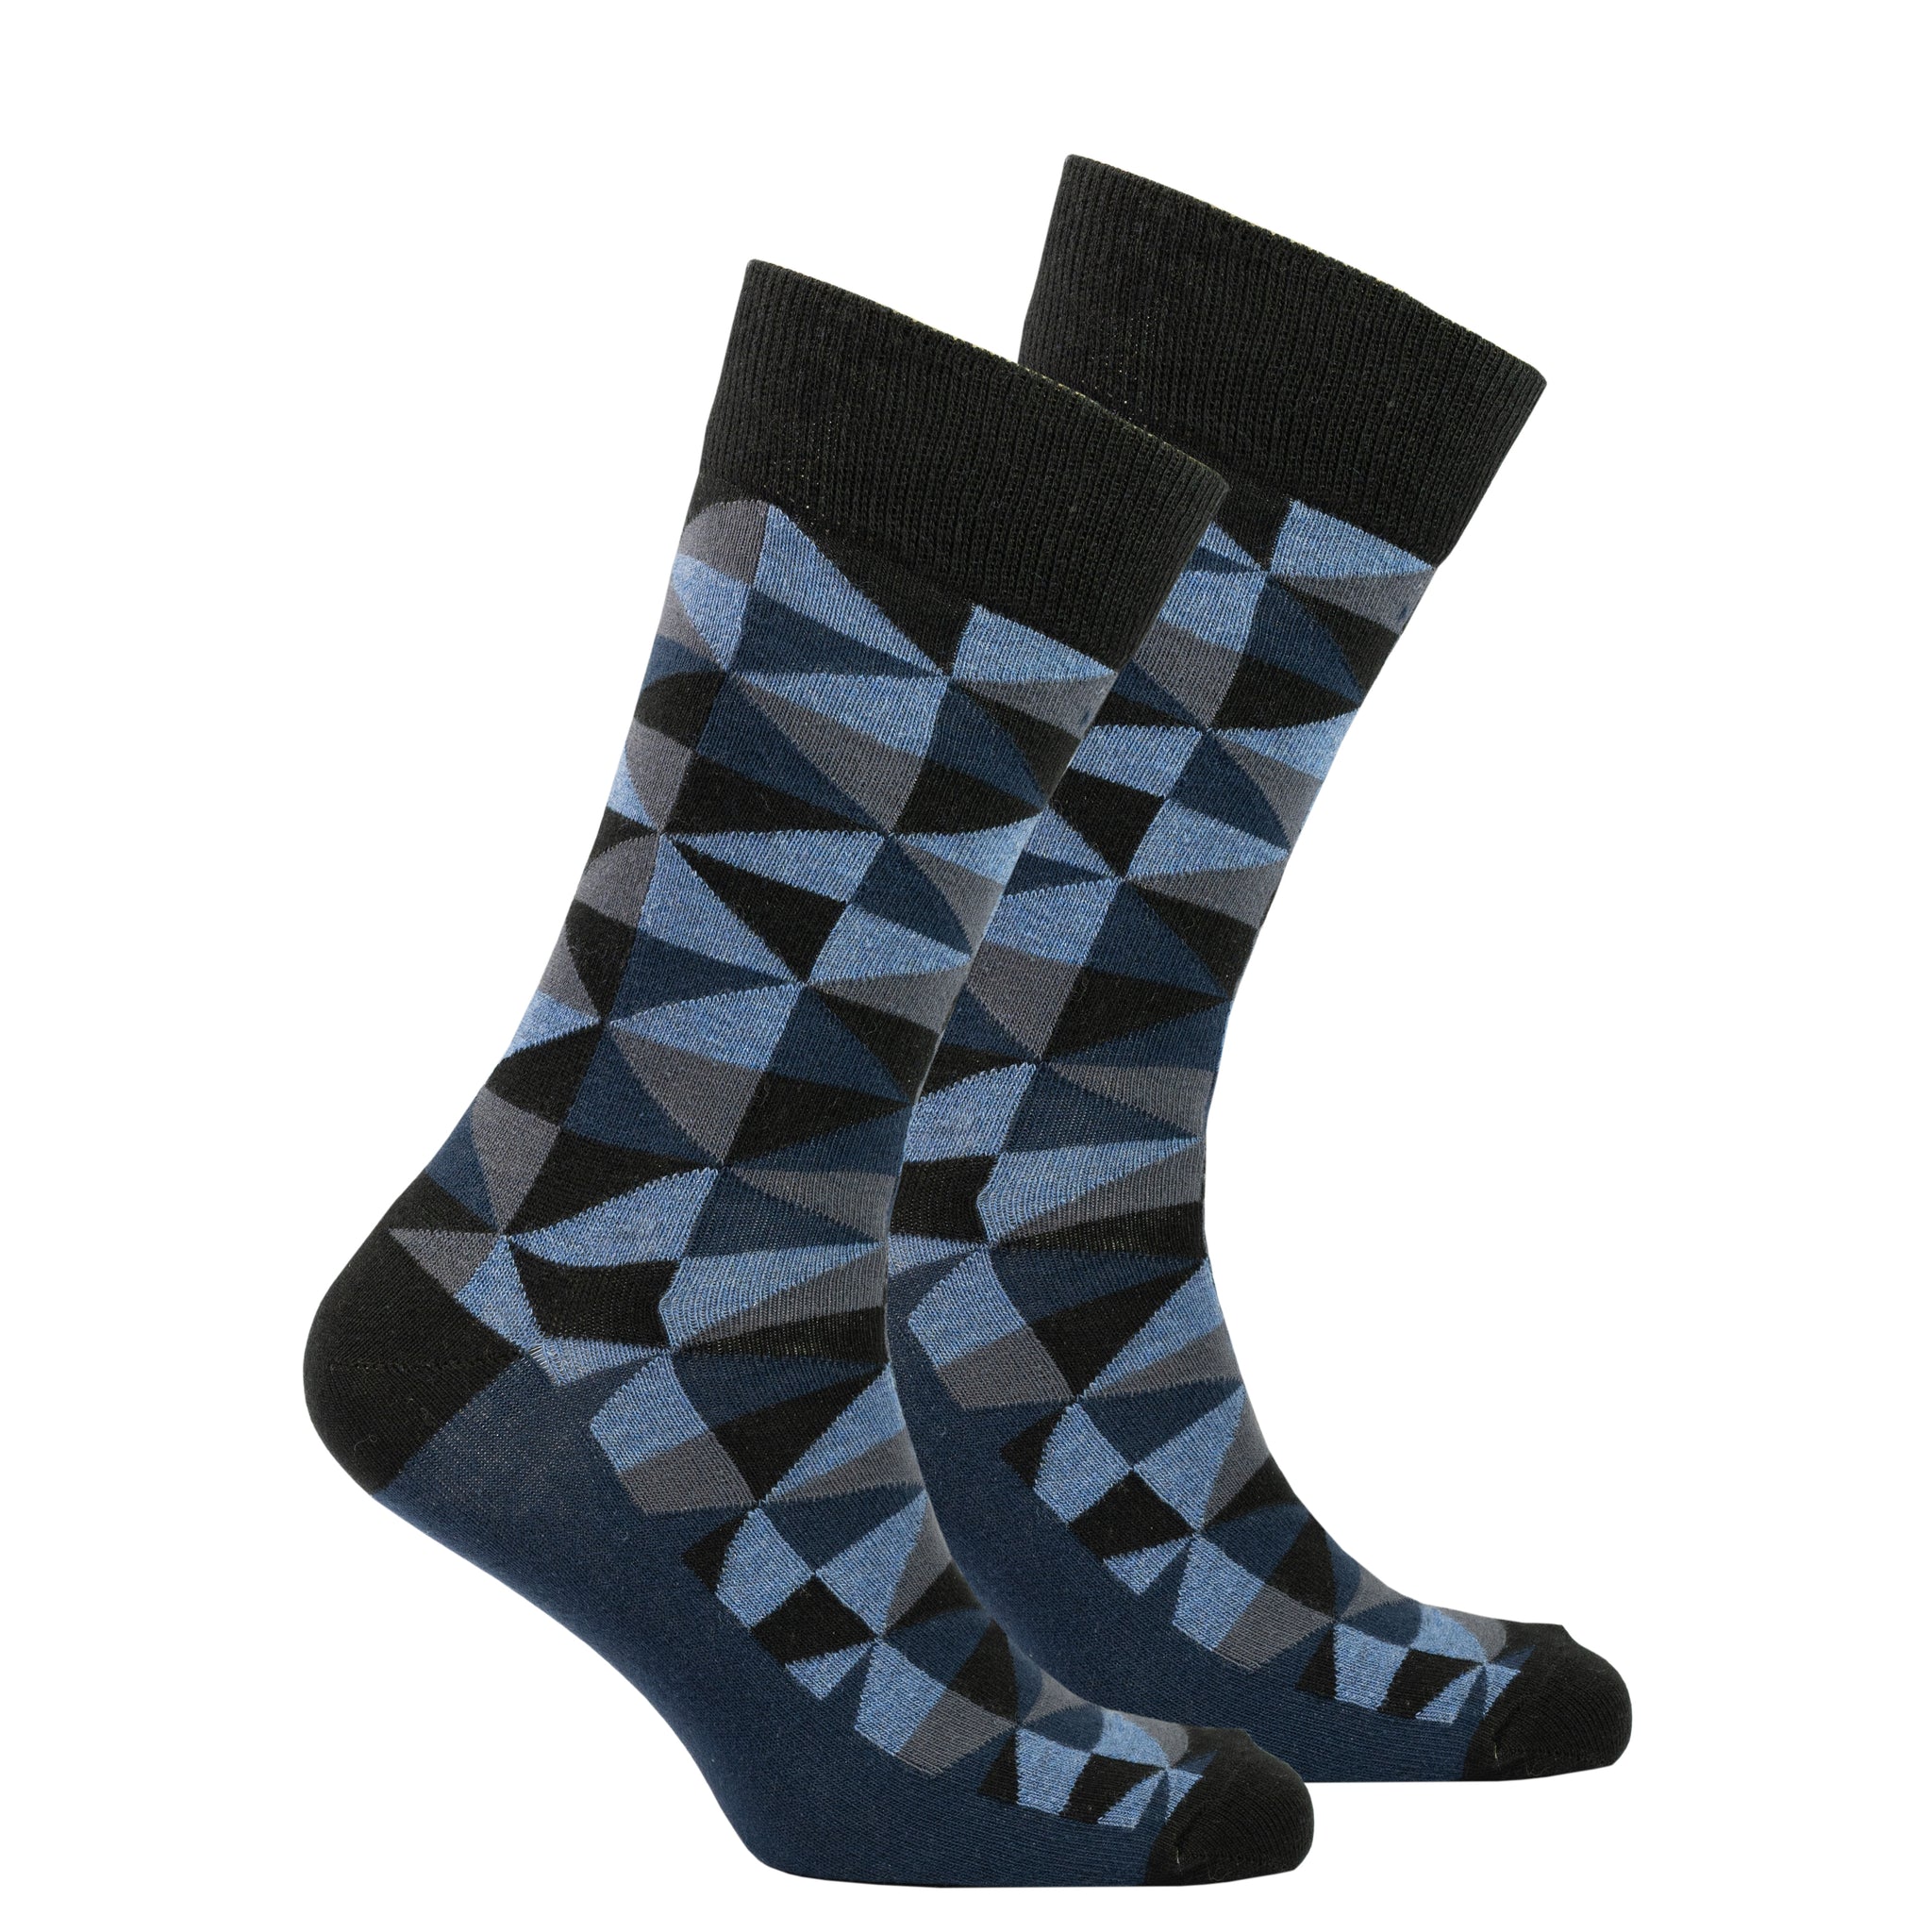 Men's Azure Triangle Socks black and blue